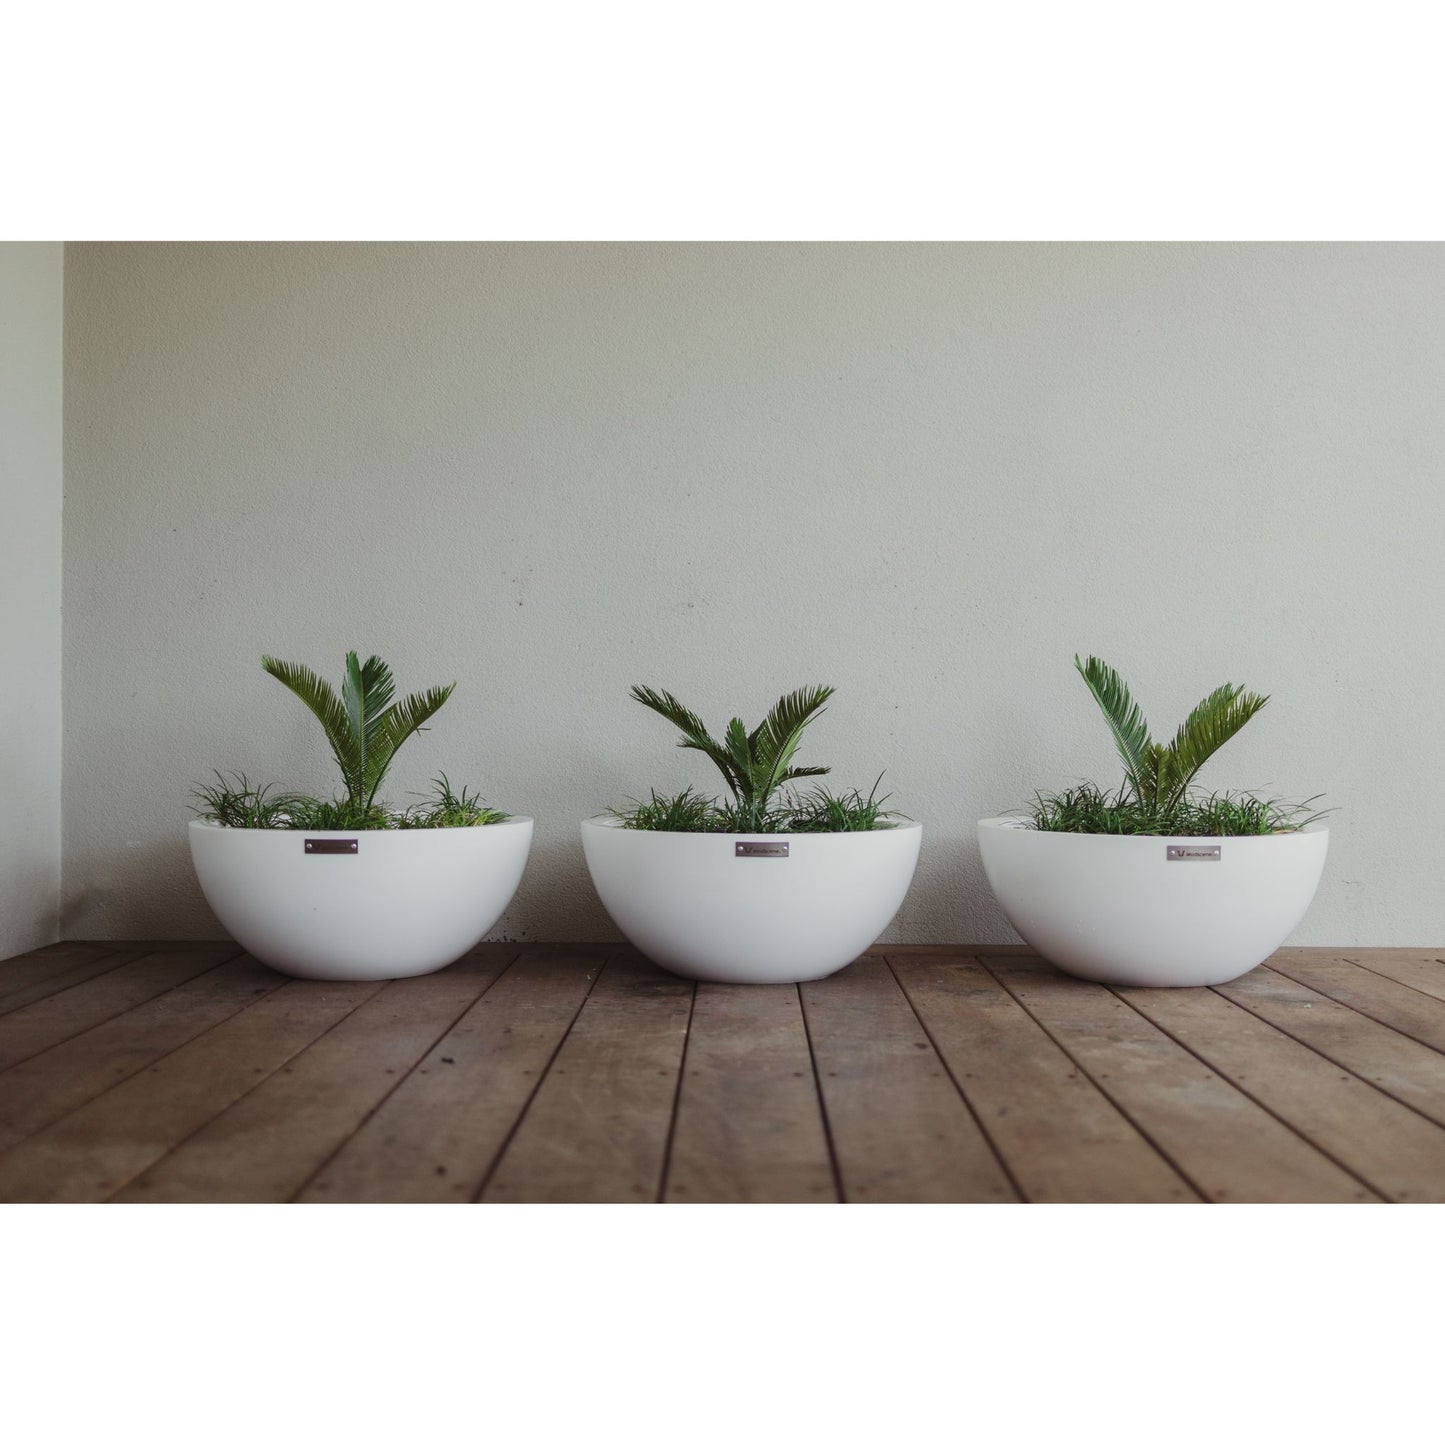 Three white planter bowls on a deck.